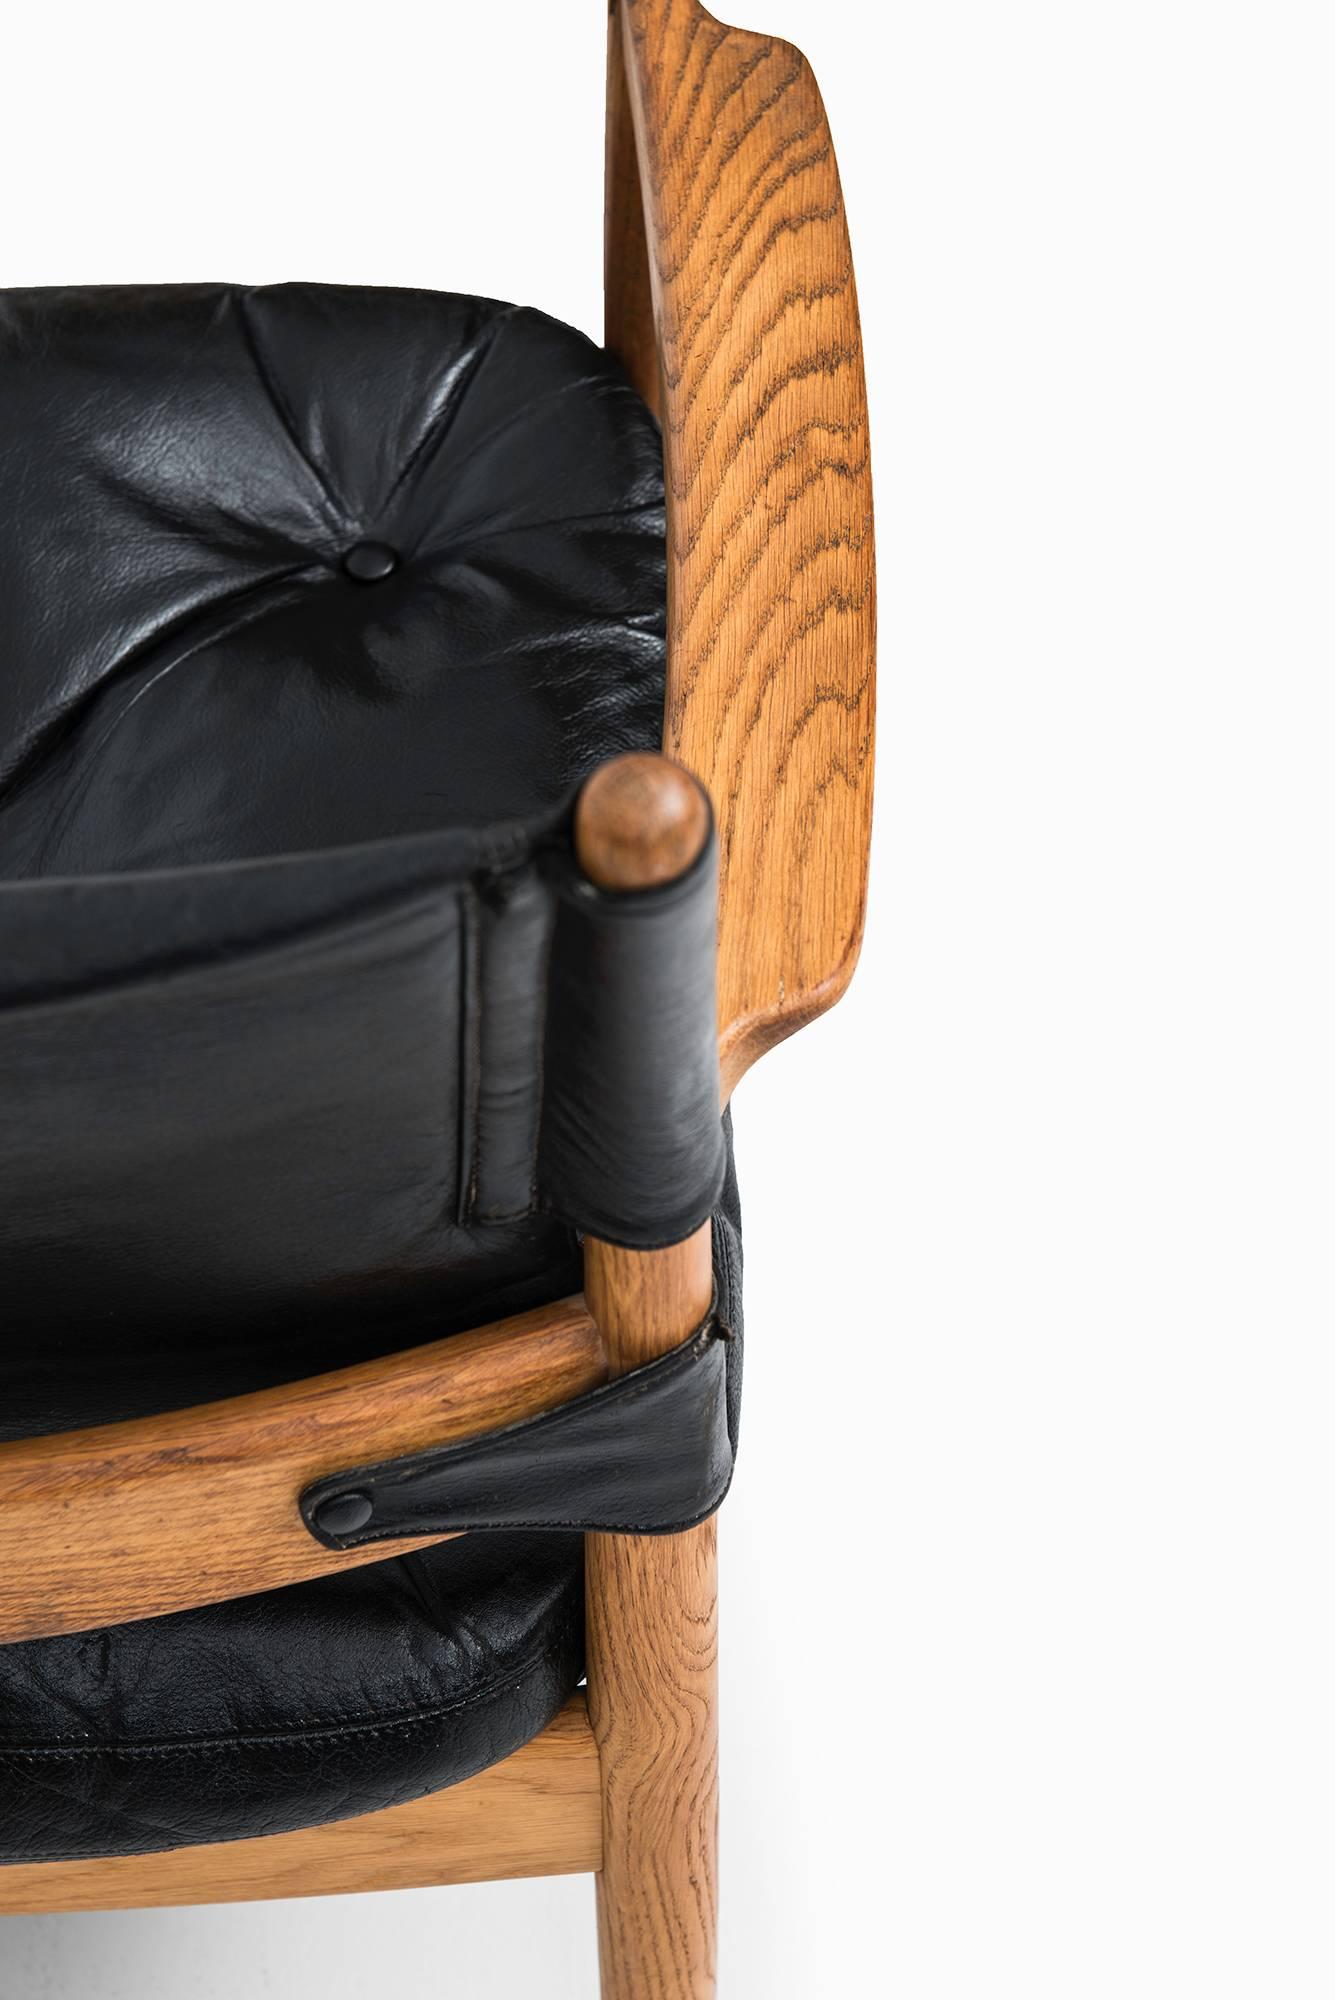 Mid-Century Modern Gunnar Myrstrand Easy Chairs by Källemo in Sweden